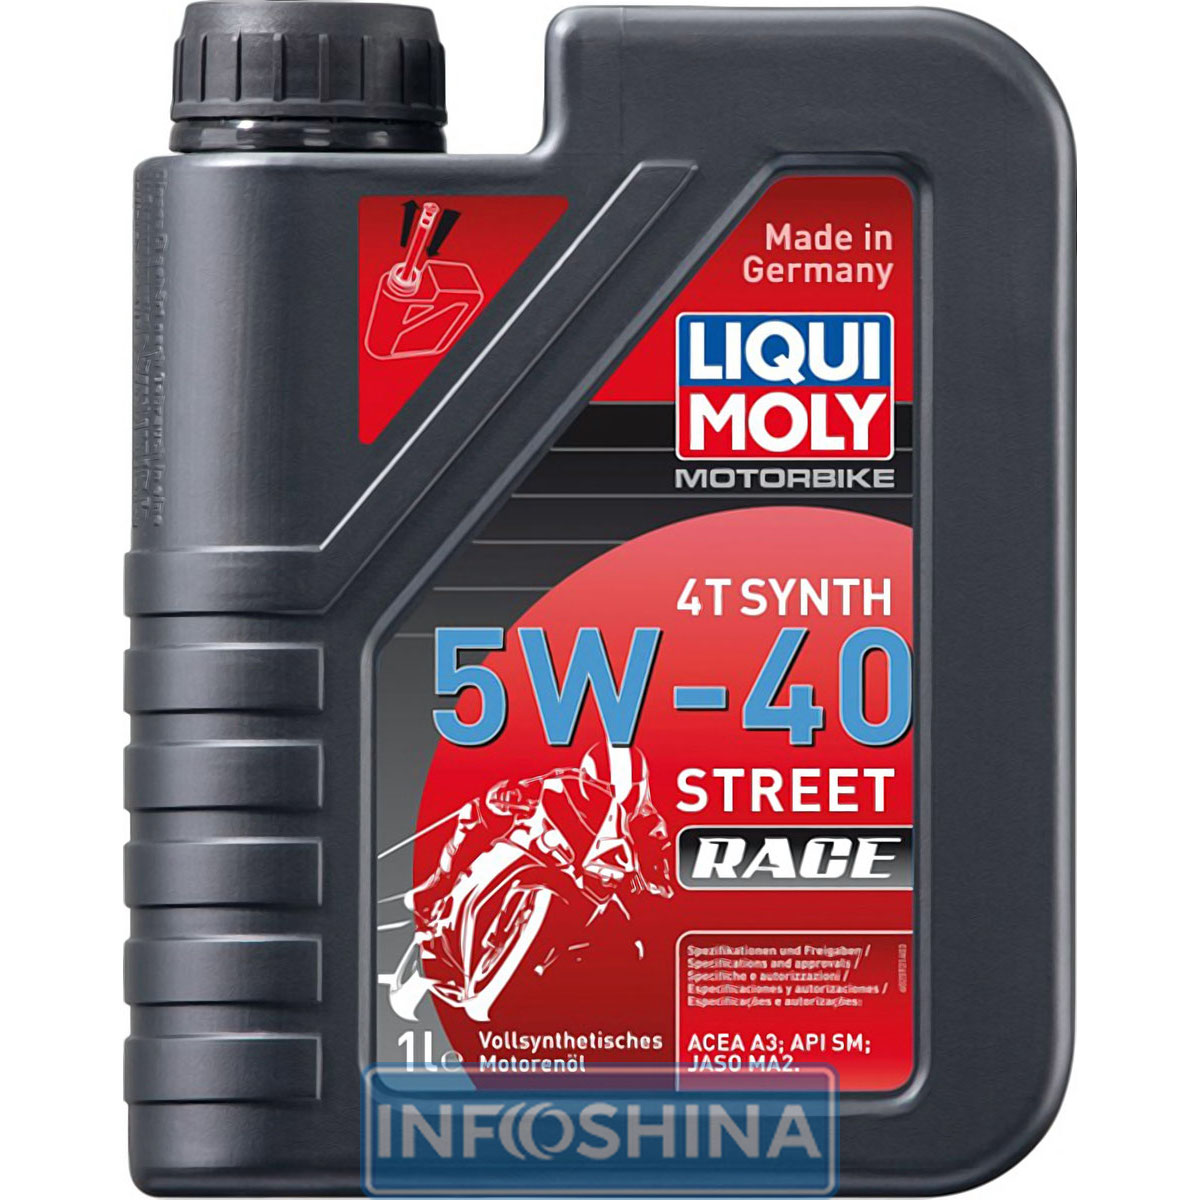 Купить масло Liqui Moly Motorbike 4T Synth Street Race